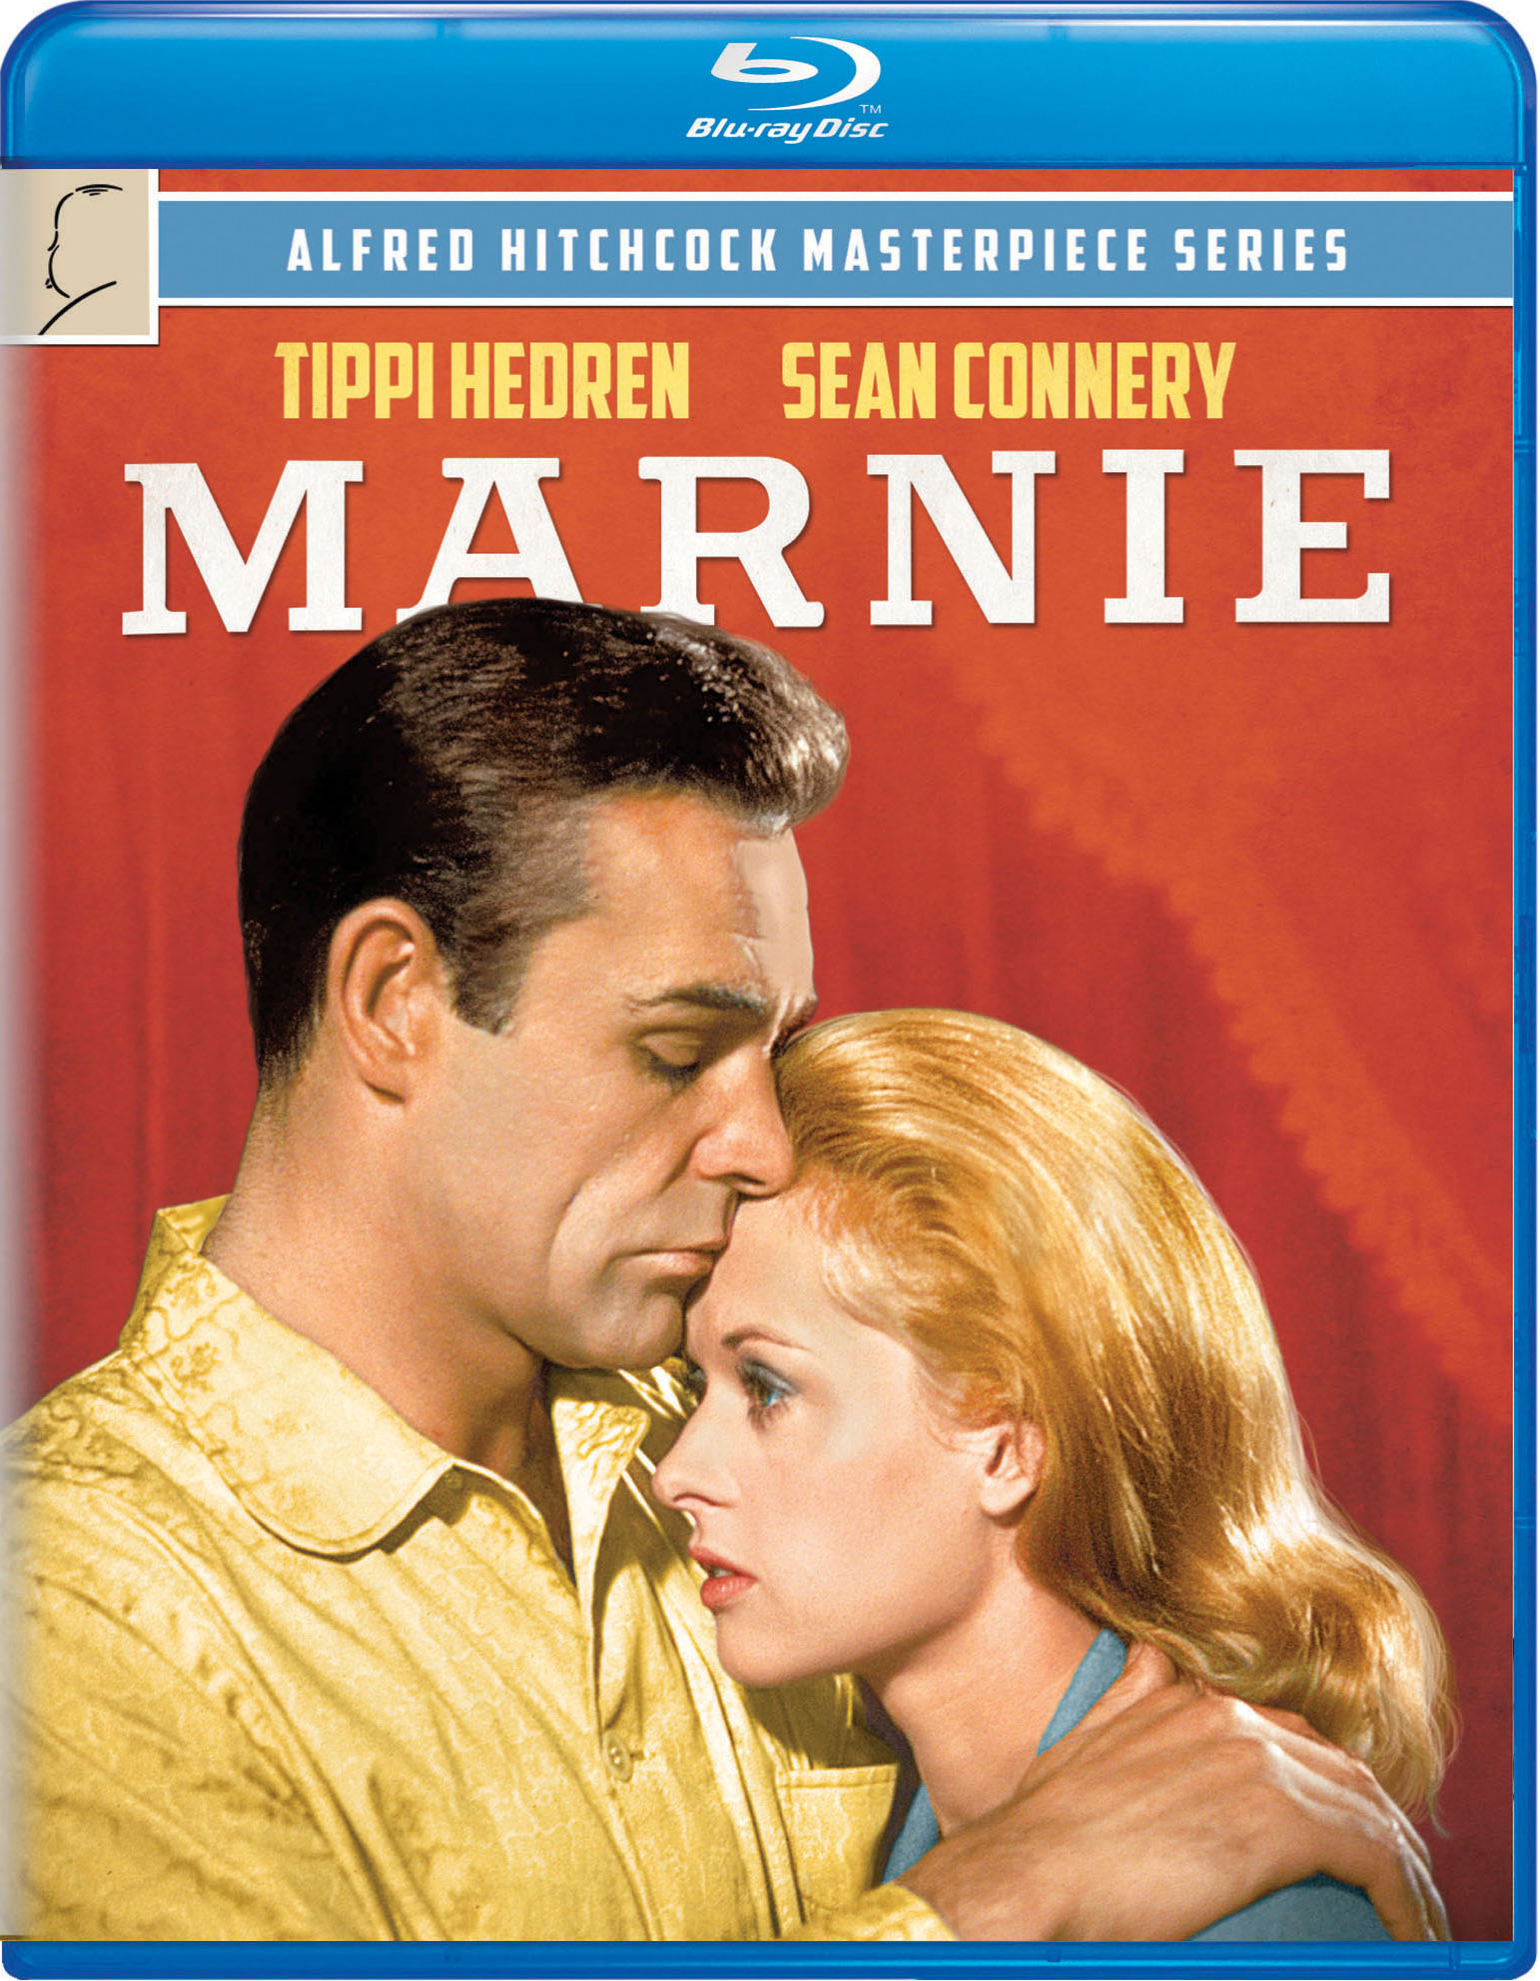 Marnie - Blu-ray [ 1964 ]  - Modern Classic Movies On Blu-ray - Movies On GRUV